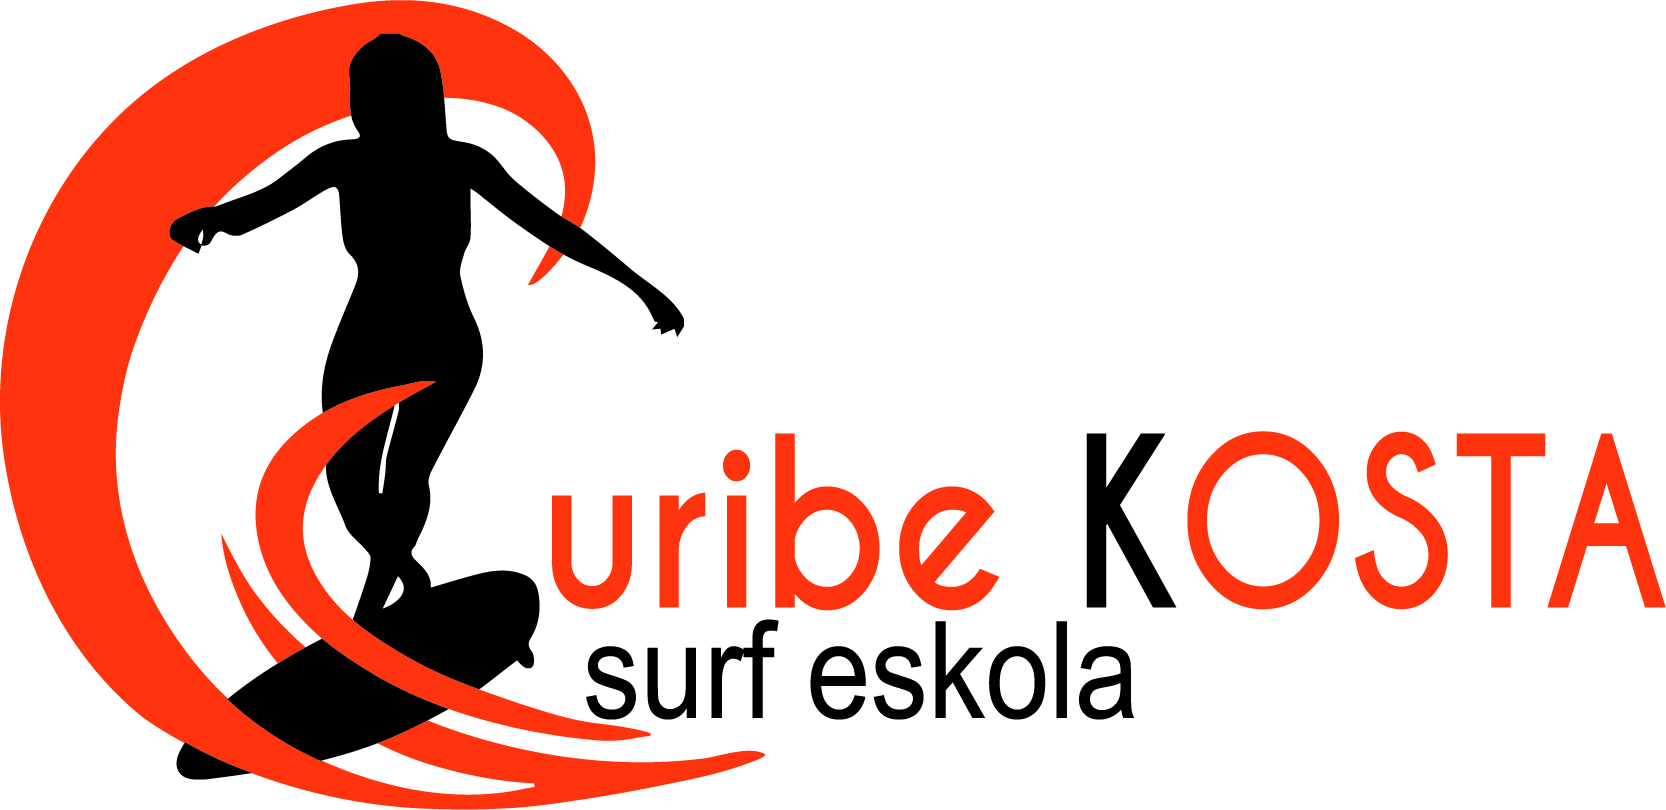 Logotipo uribe kosta surf eskola